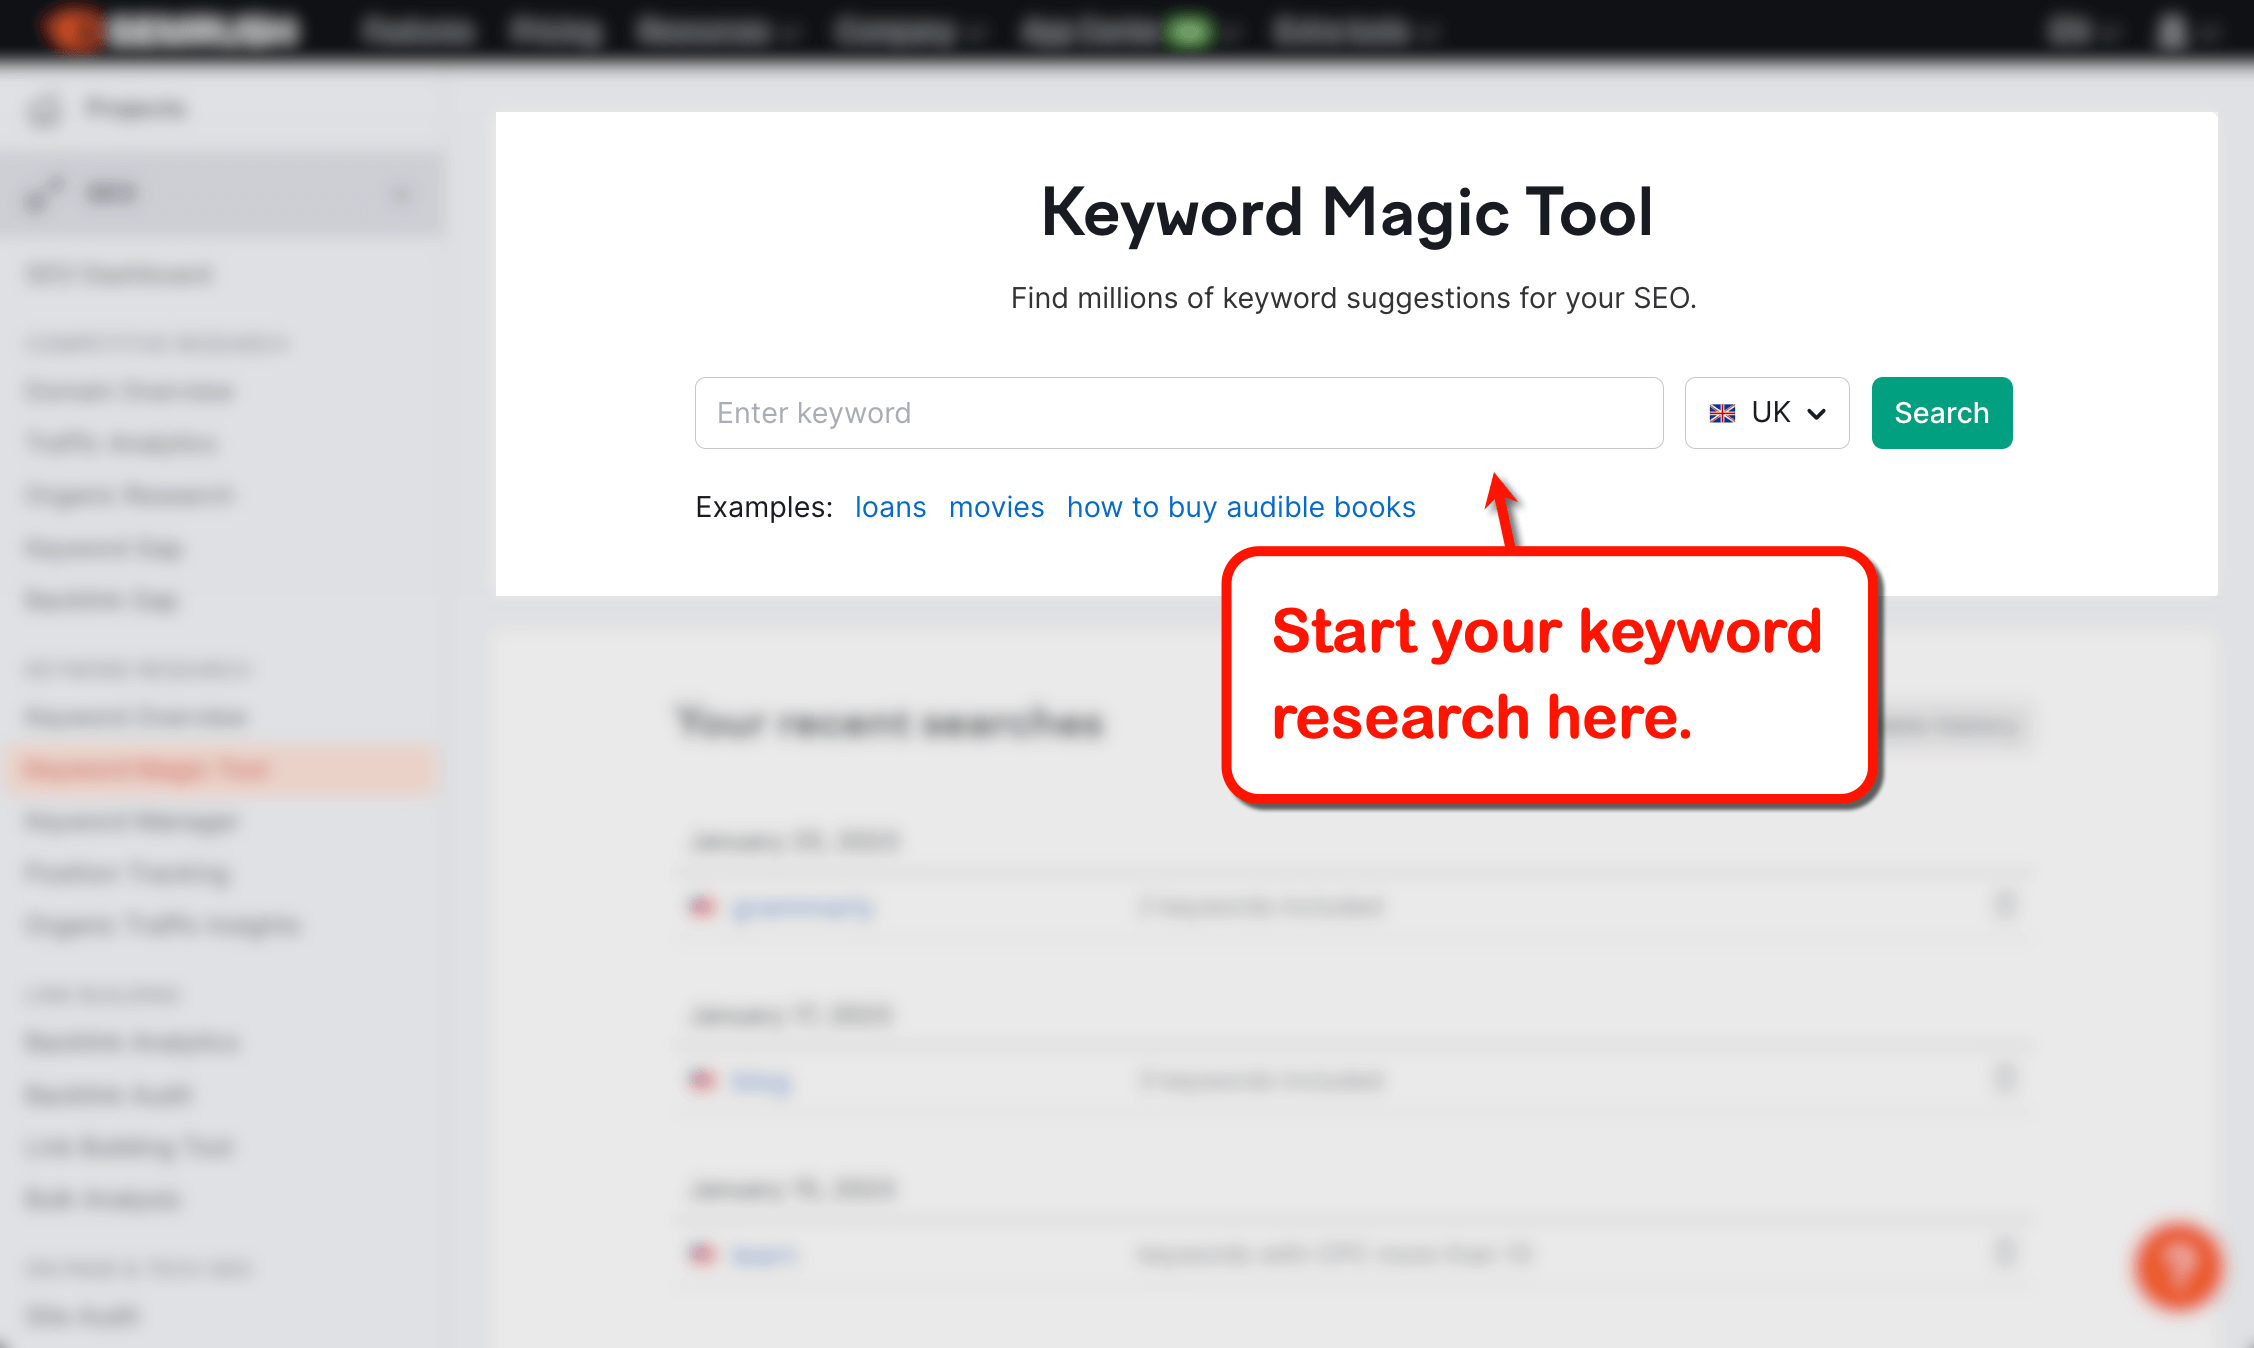 Use keyword research tools like Keyword Magic Tool from Semrush.